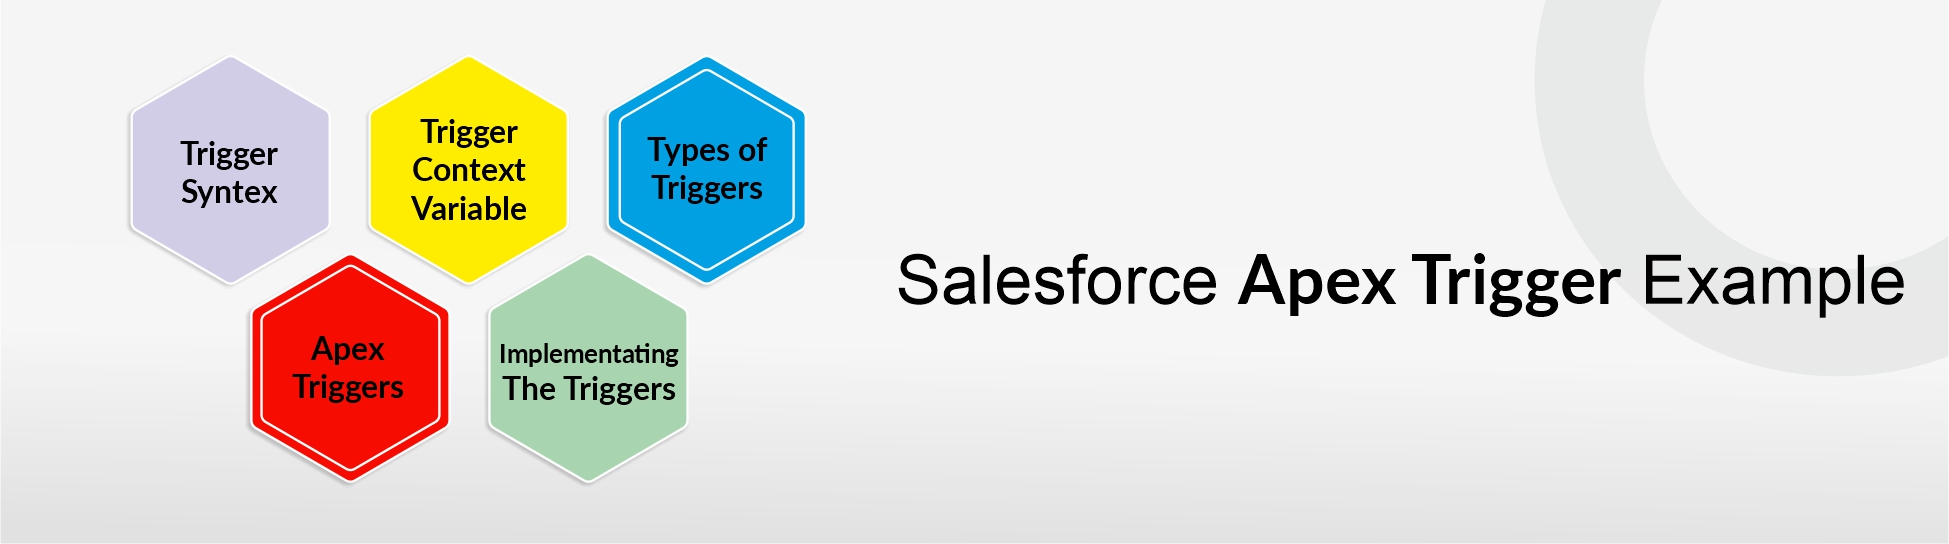 Salesforce-Apex-Trigger-Examples